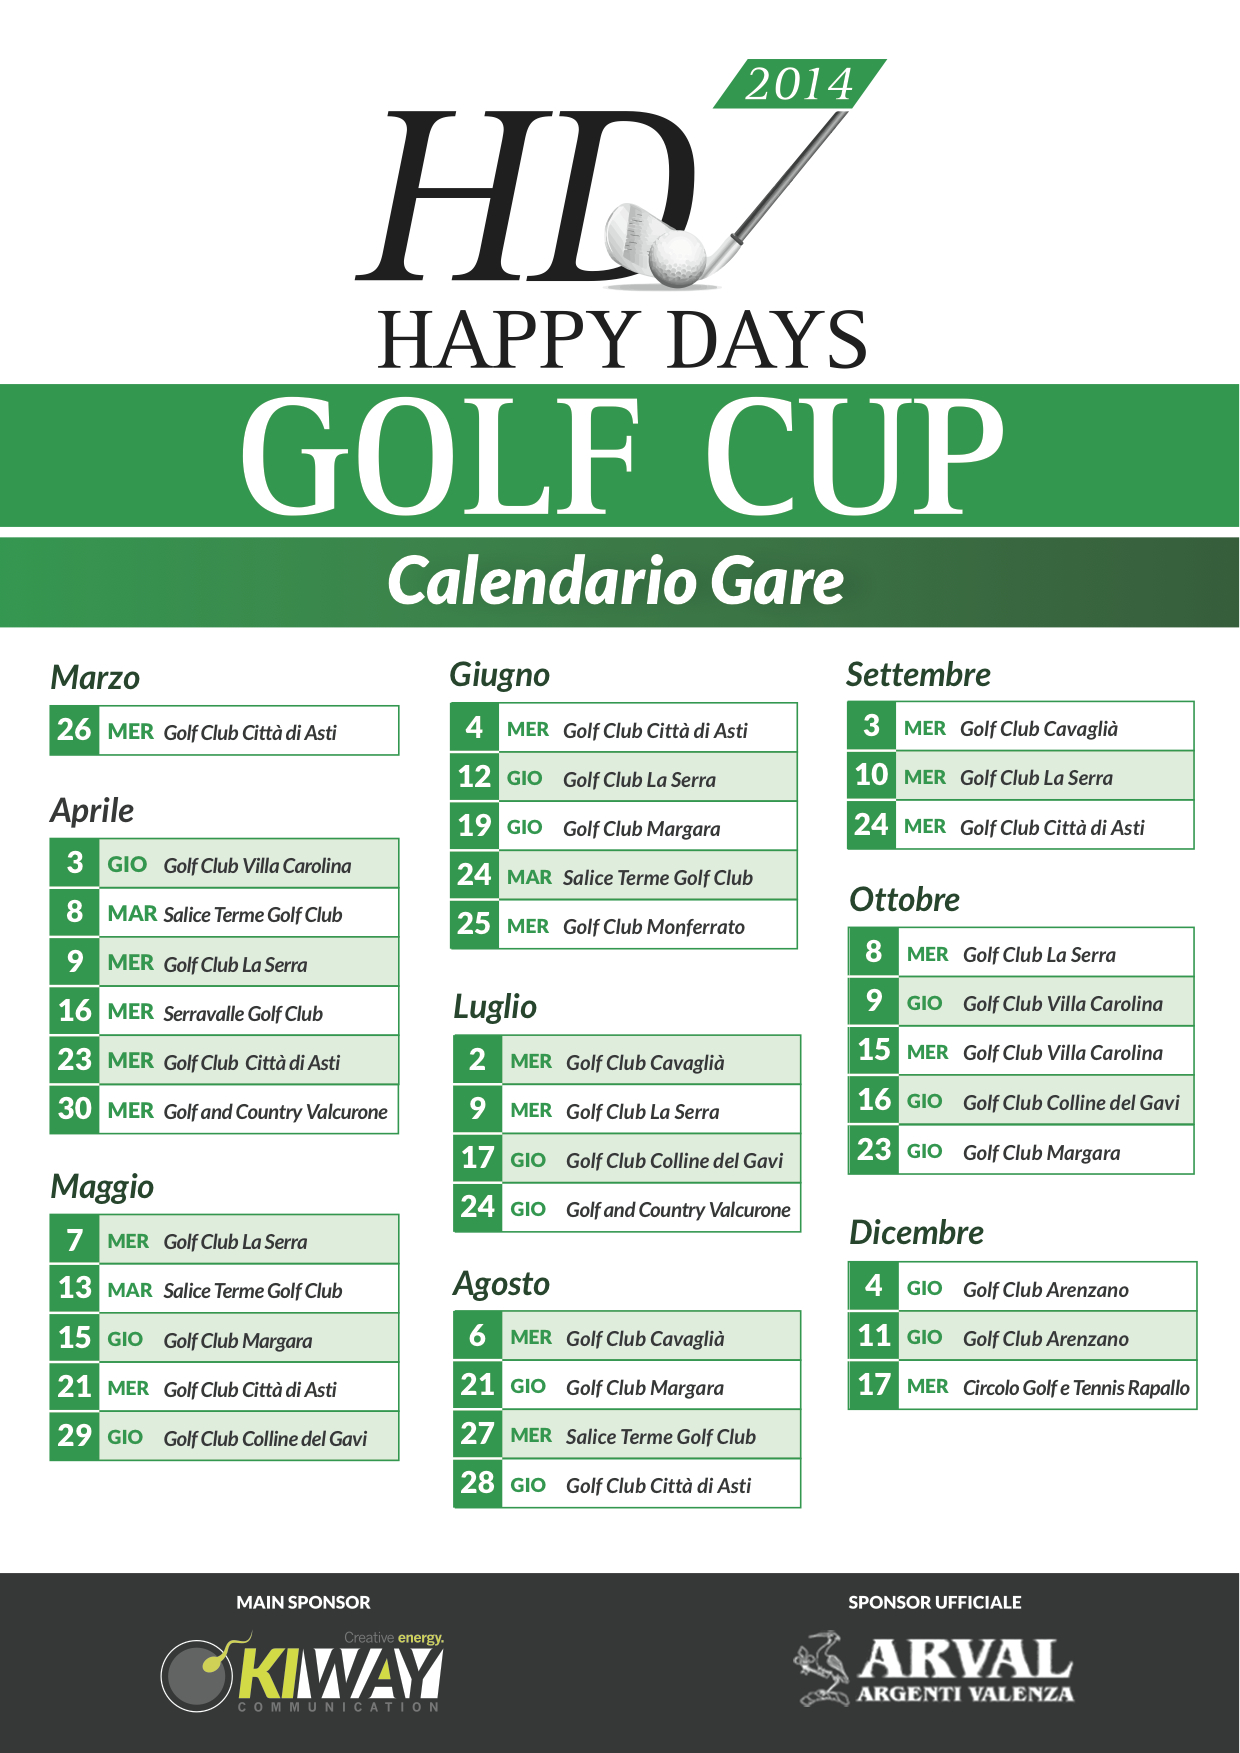 HAPPY DAYS GOLF CUP 2014